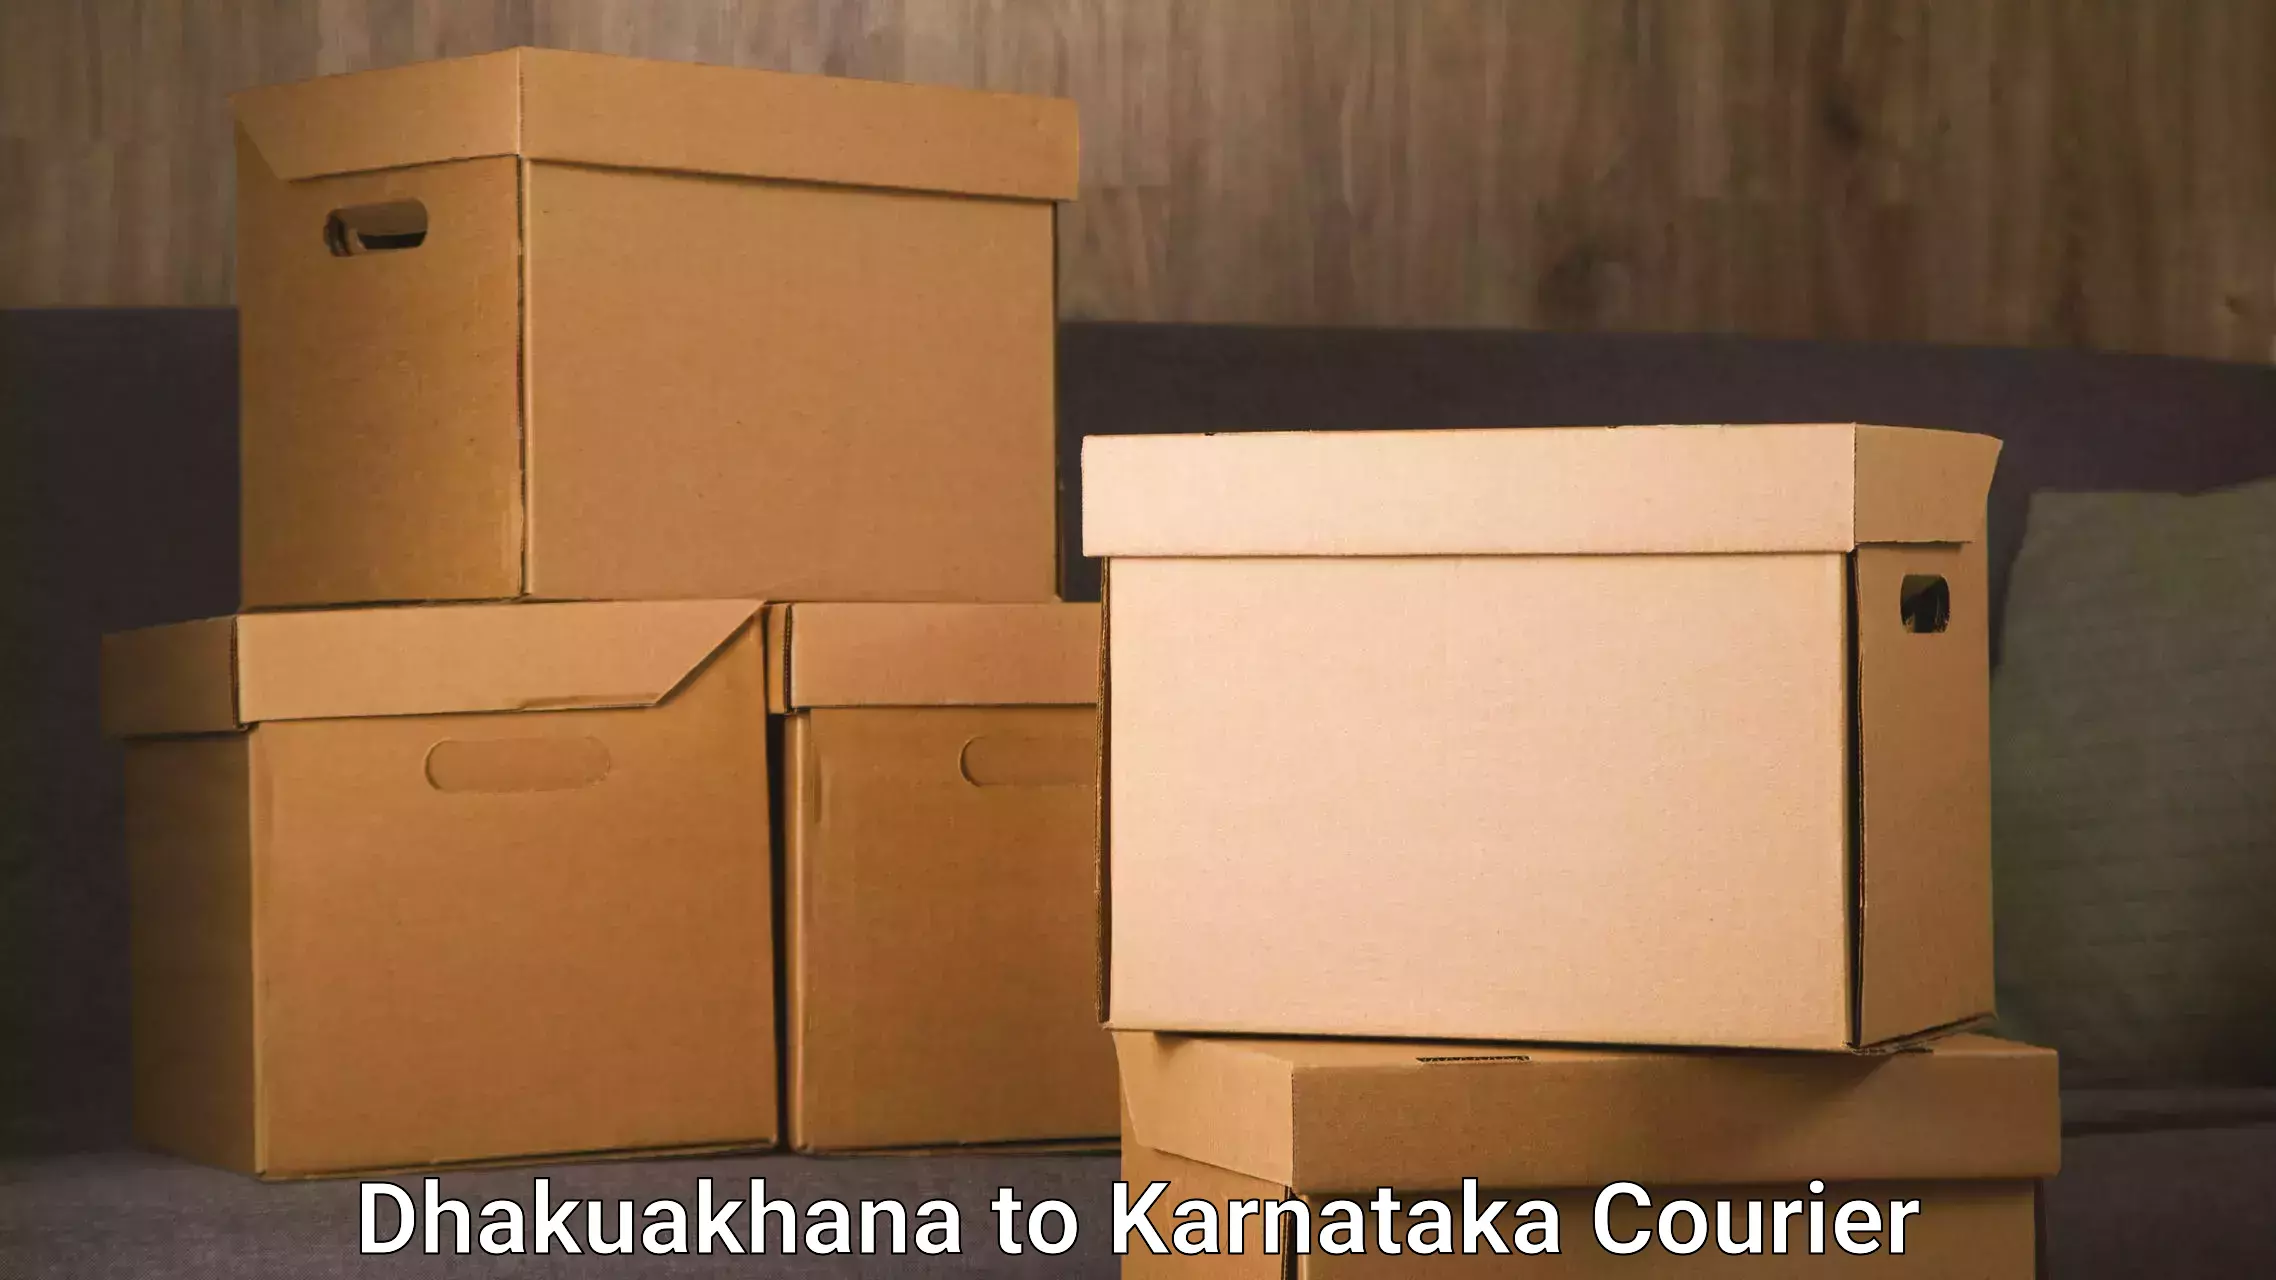 Courier service innovation Dhakuakhana to Karnataka